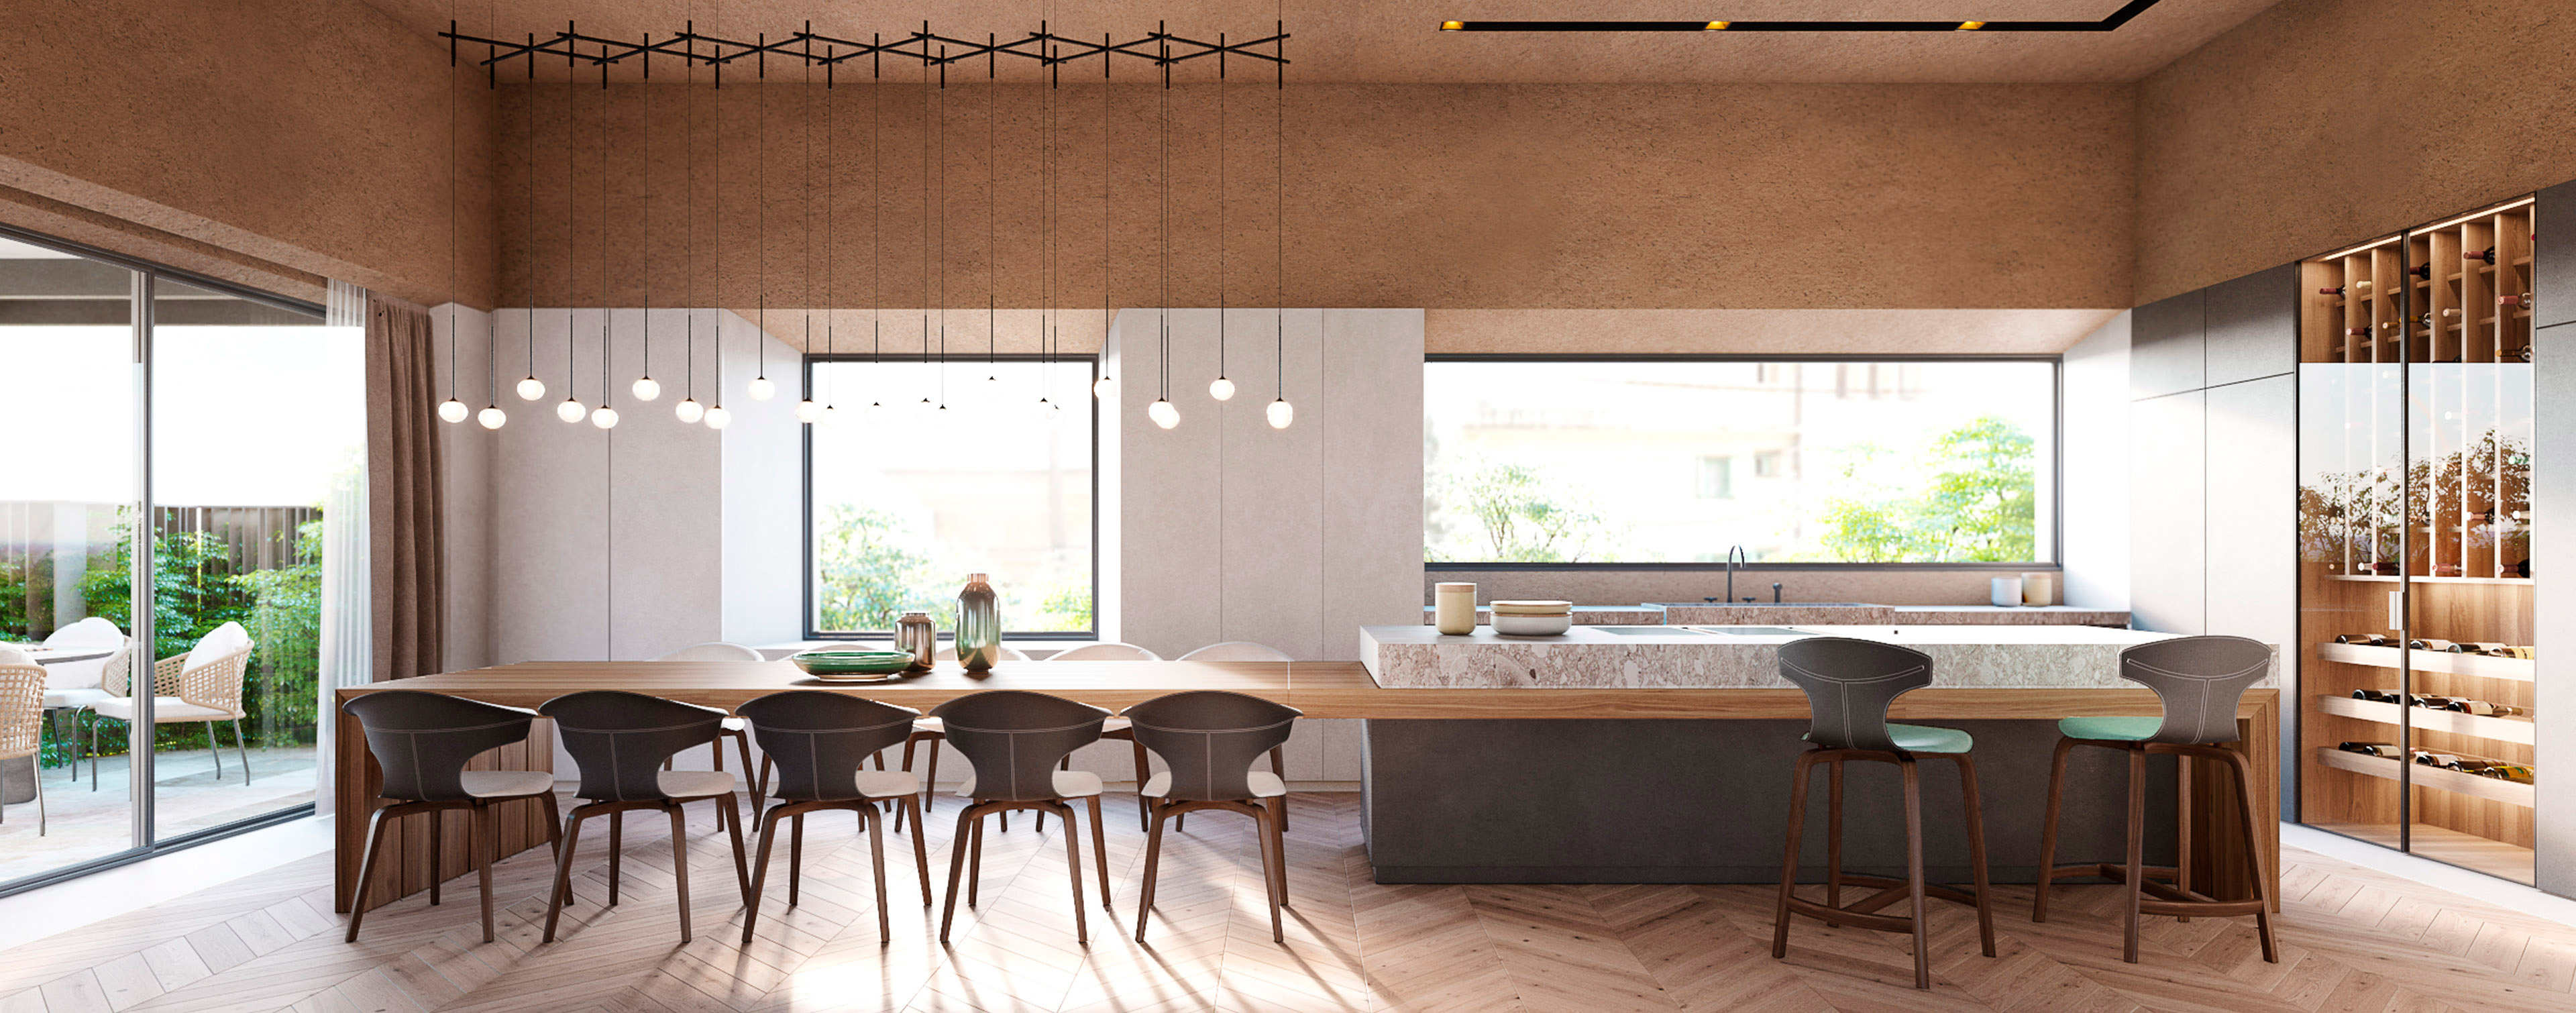 luv studio luxury architects barcelona pedralbes spc house IMG 01 - LUV Studio - Architecture et design - Barcelone